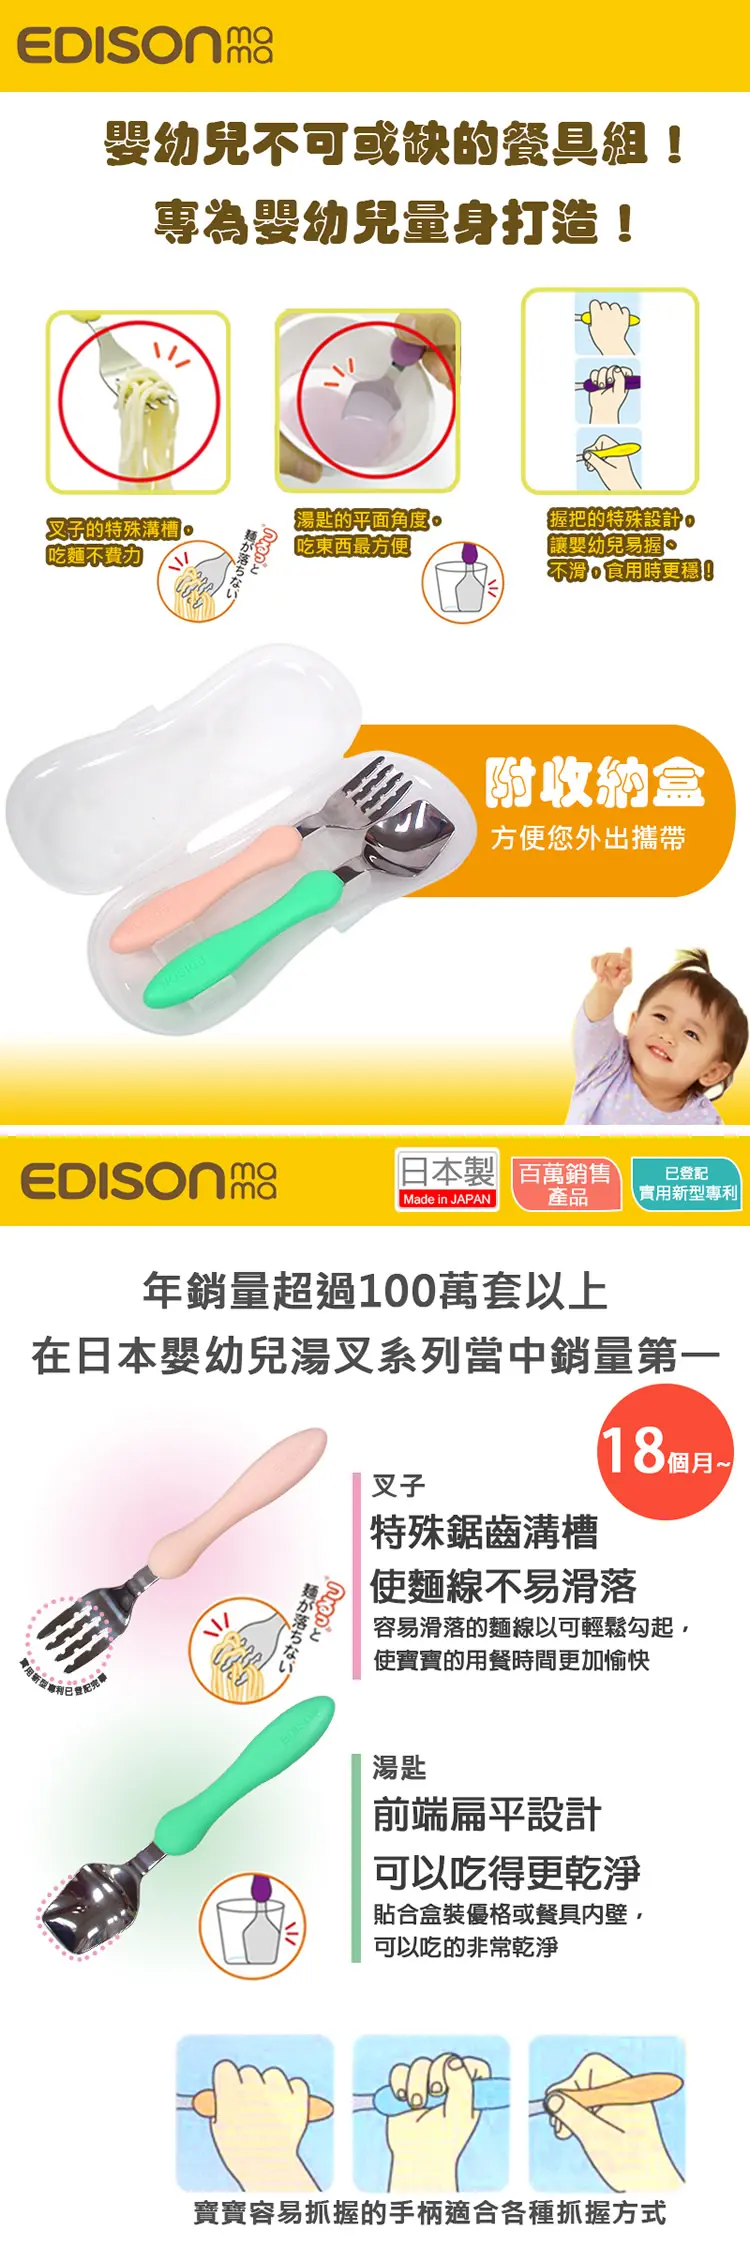 Edison 婴幼儿不锈钢学习匙叉套装 附收纳盒